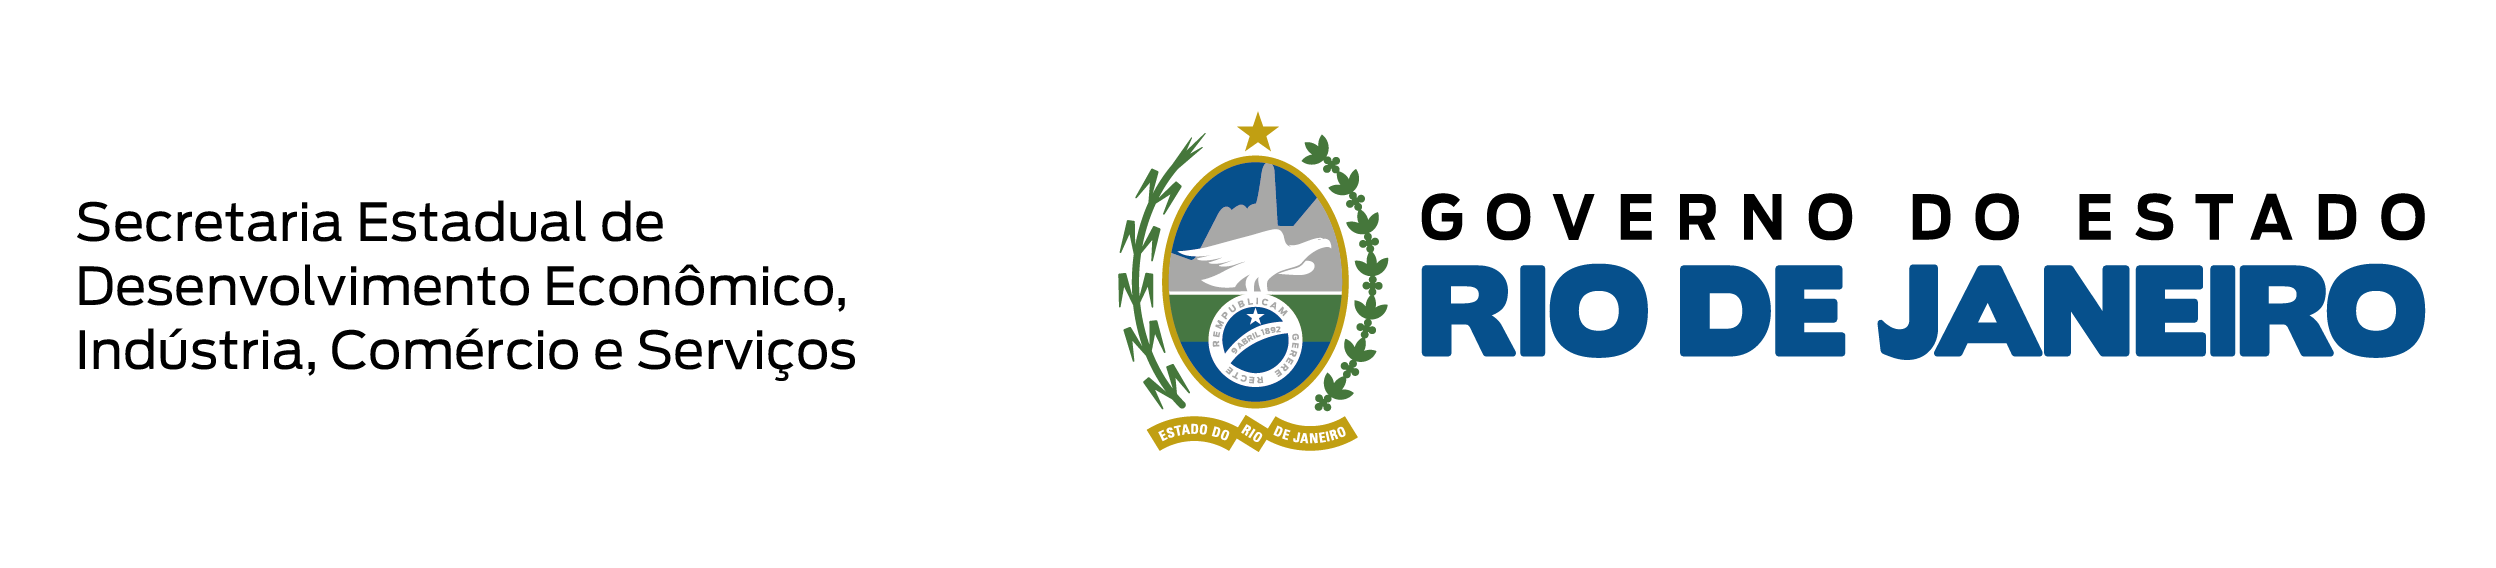 logotipo do governo do Rio de Janeiro